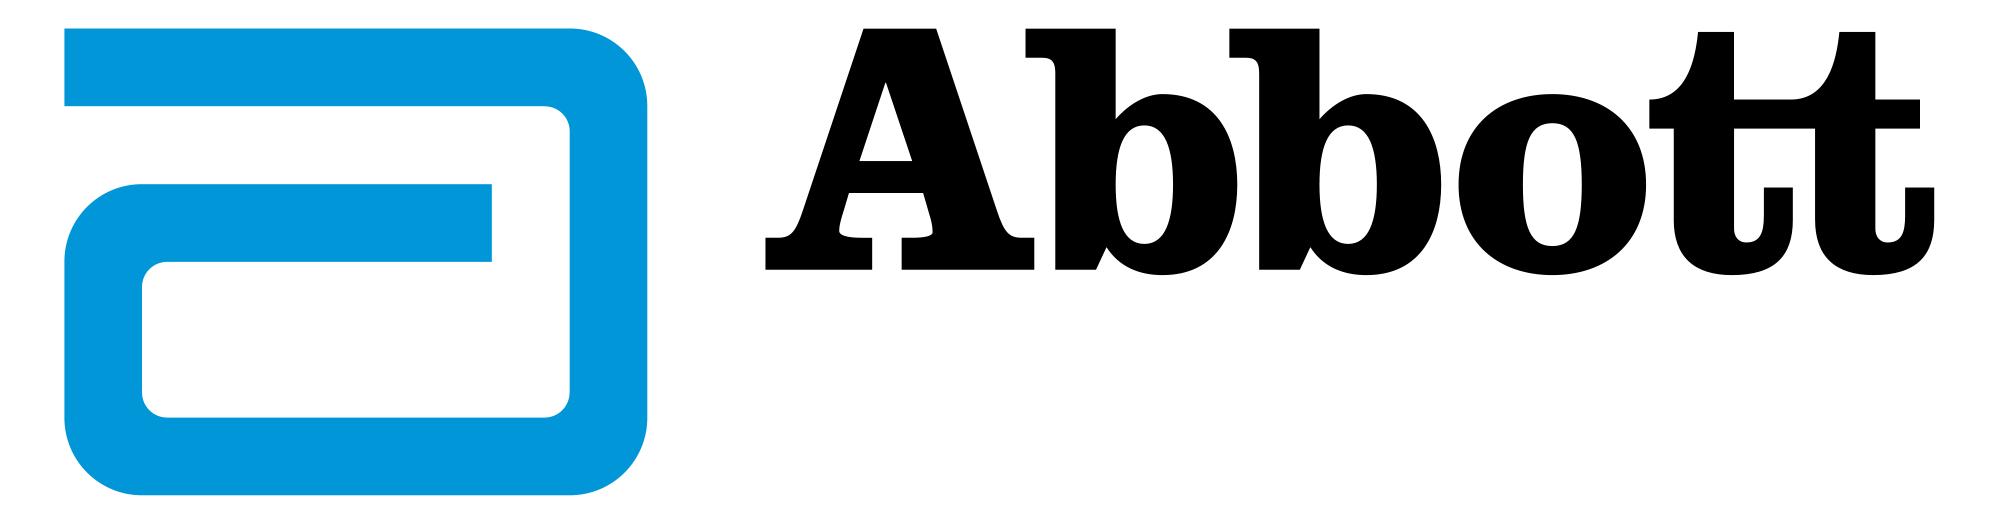 Logo Abbot Laboratories PNG - 98820